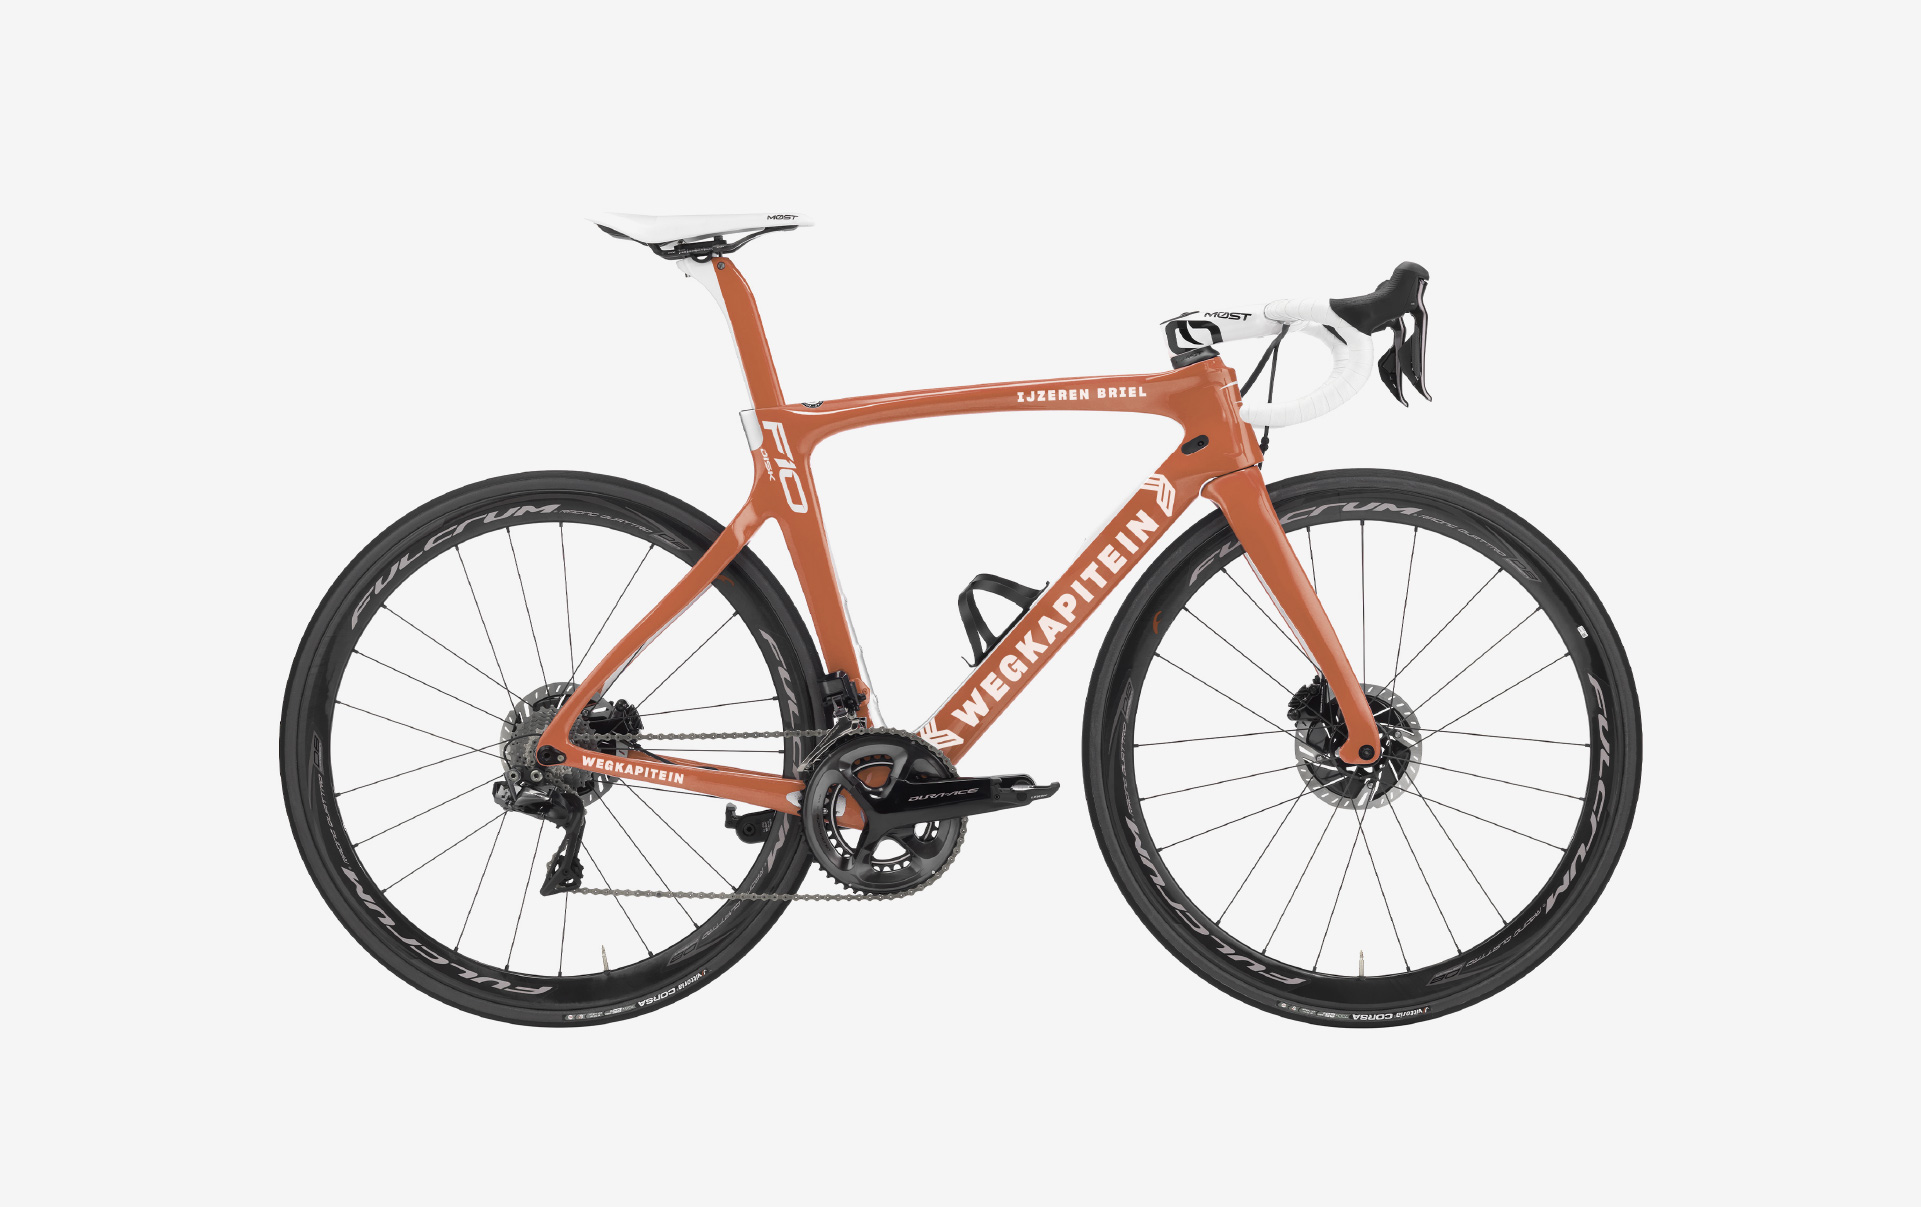 Wegkapitein's branded racing bicycle in orange on a white background